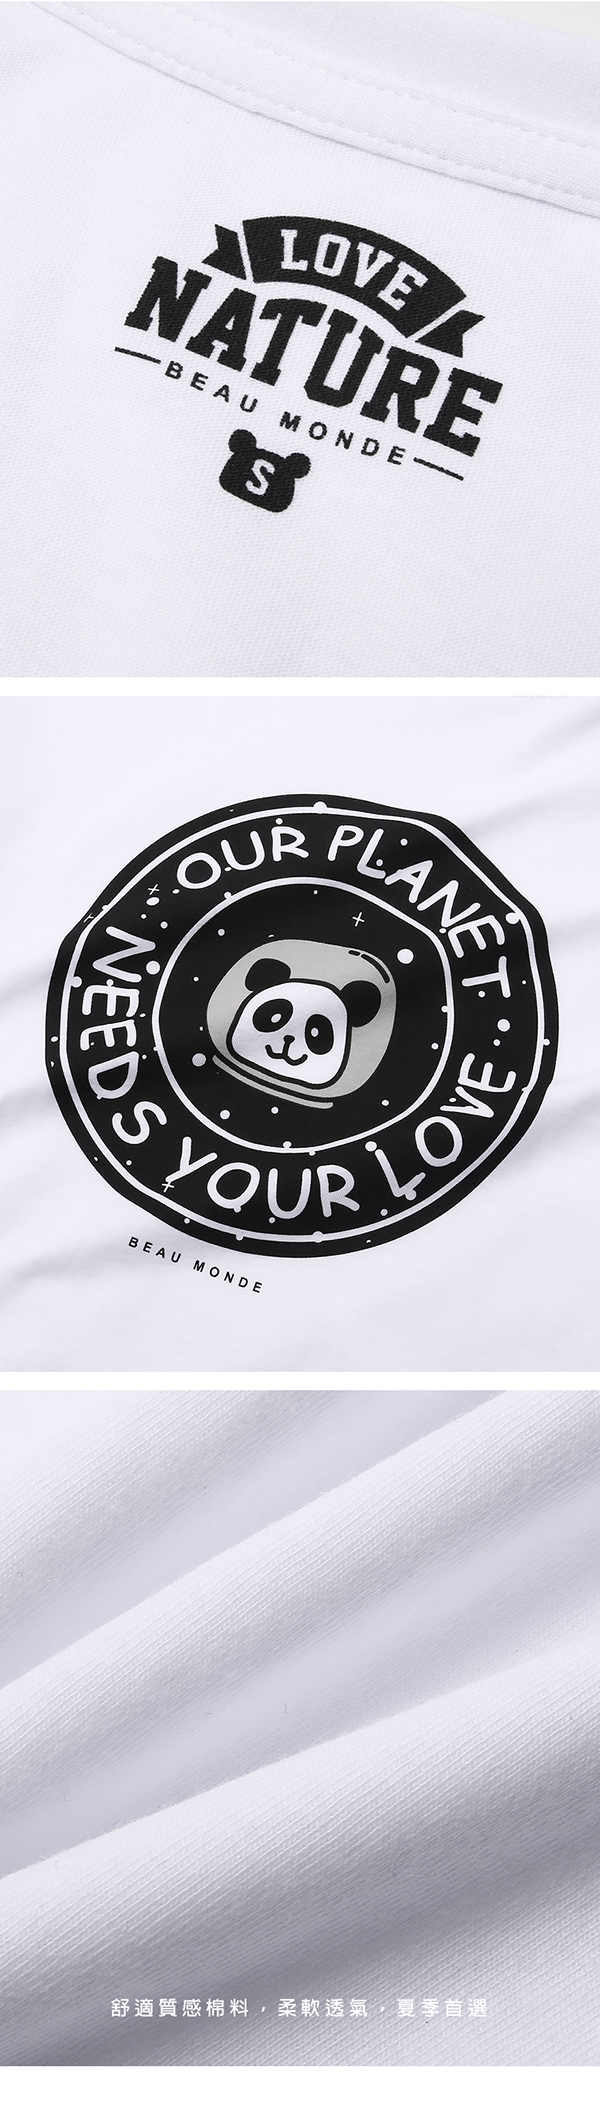 GIORDANO 女裝可愛熊貓短袖印花T恤-21 標誌白